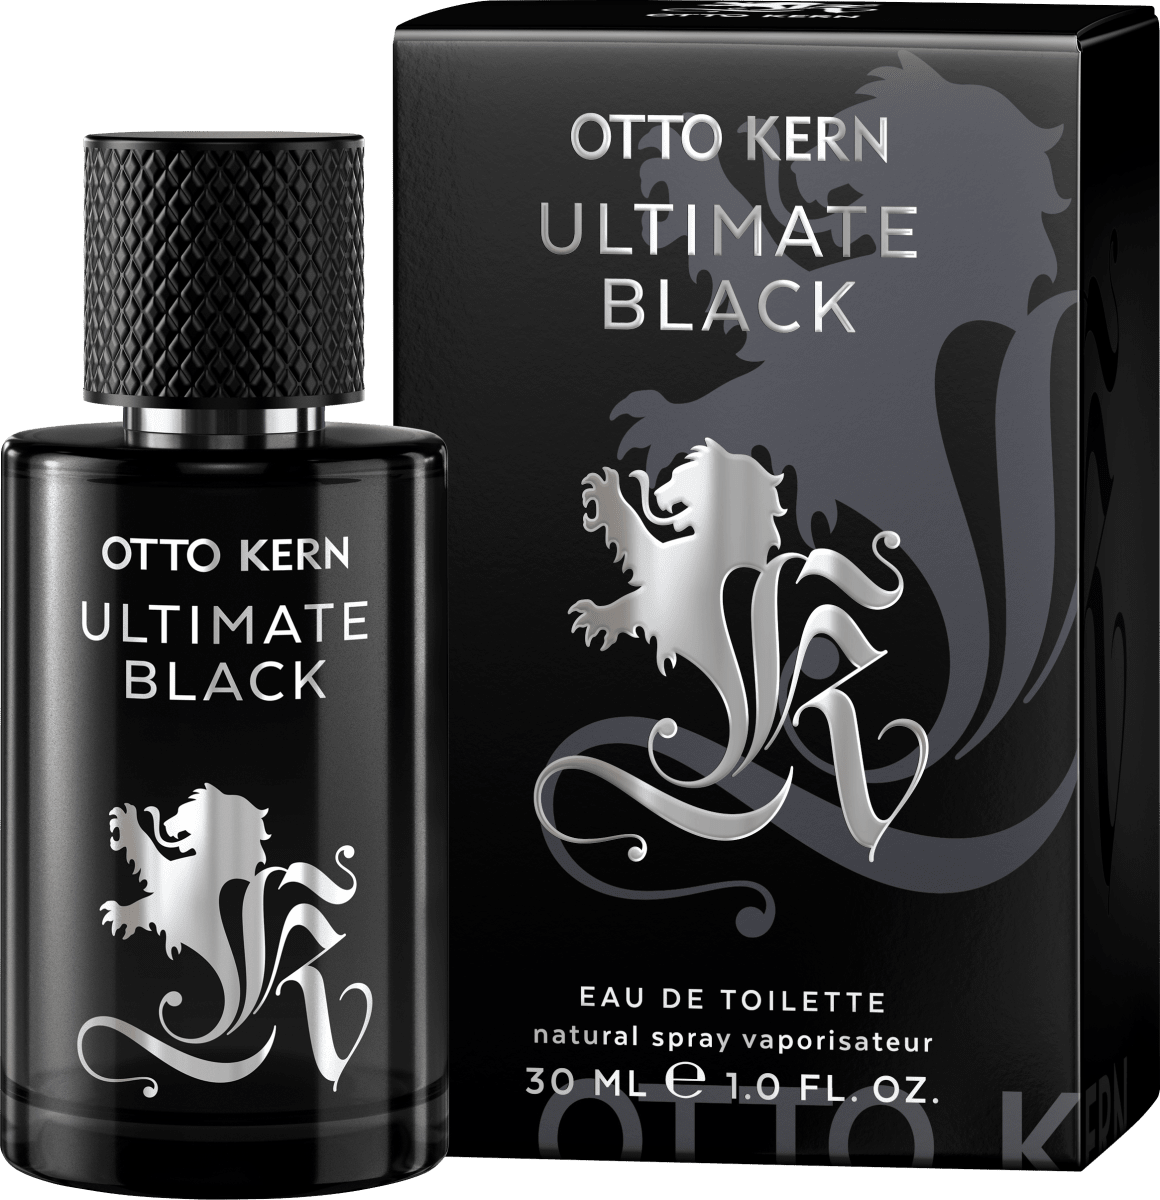 Otto Eau de Toilette Ultimate Black, 30 ml dauerhaft günstig kaufen | dm.de